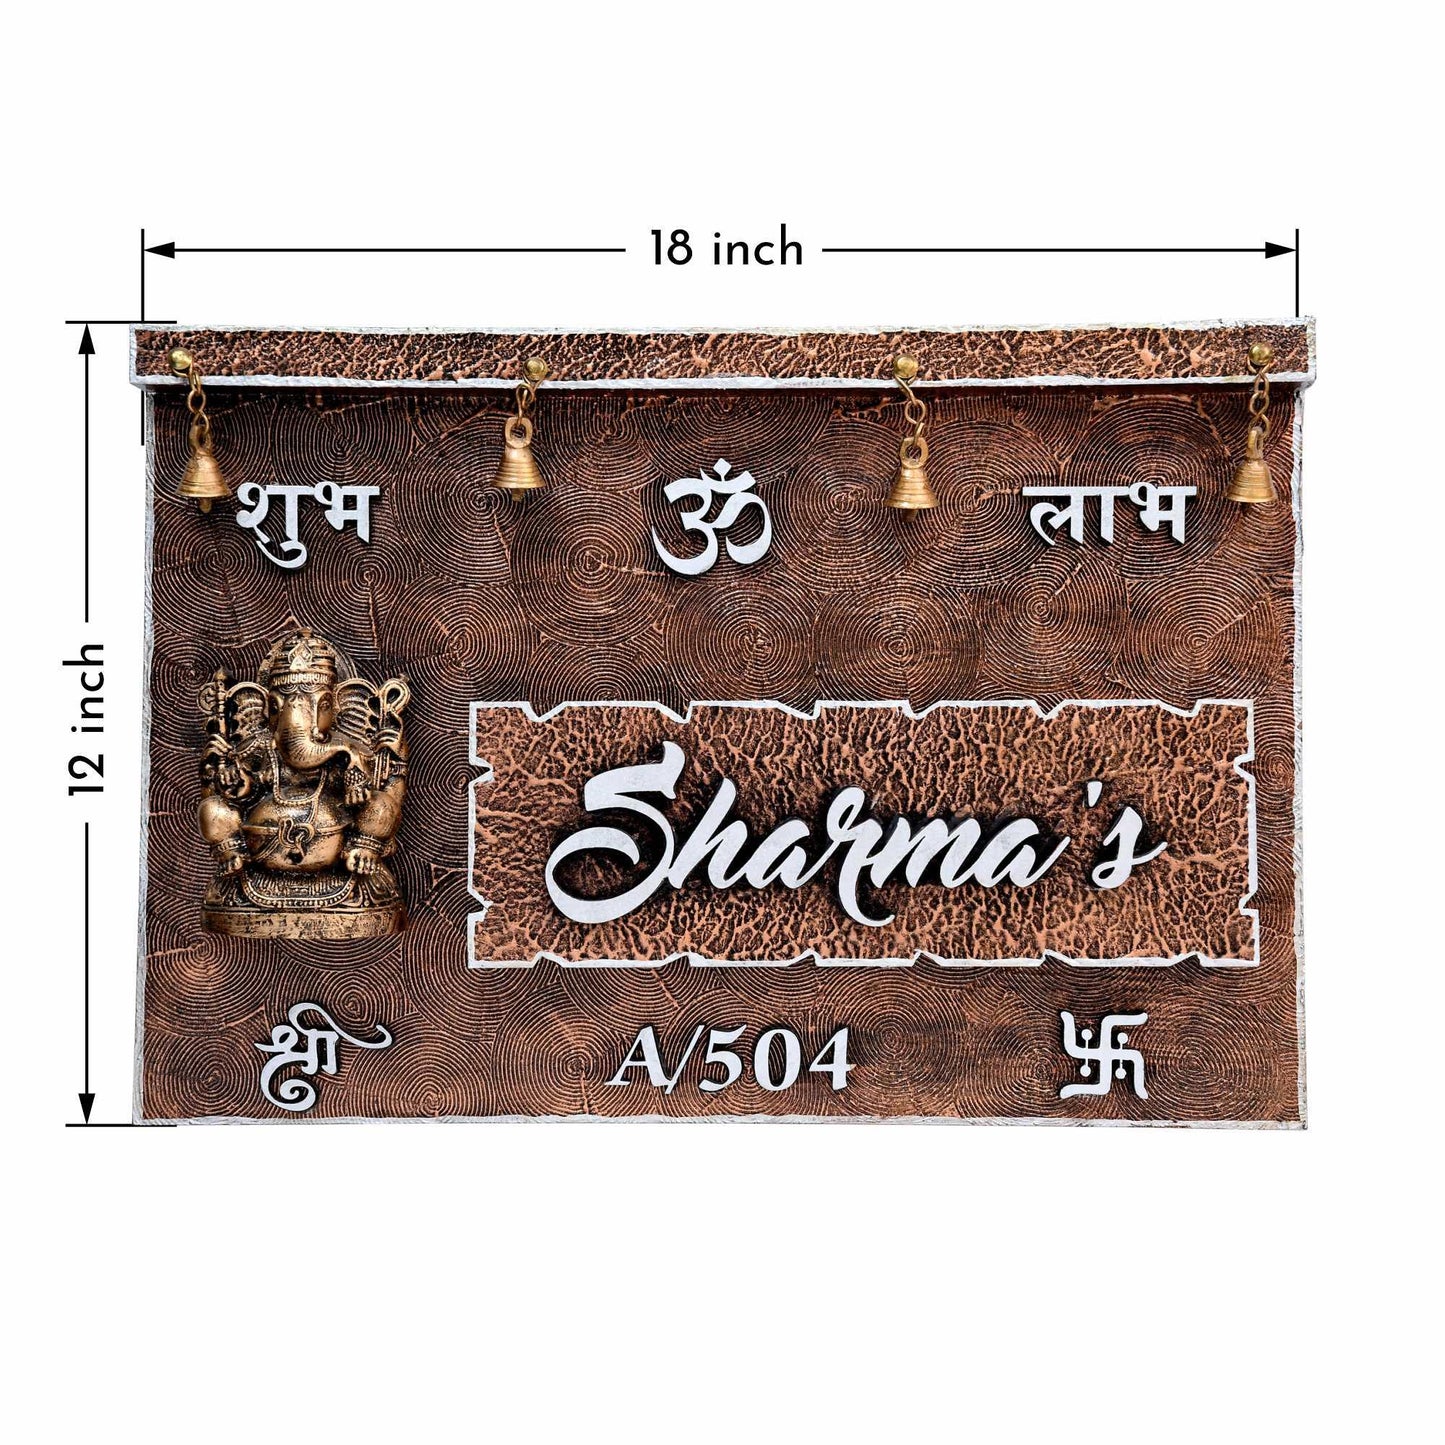 Shubh Prateek - Decorative Wooden Name Plate - Housenama